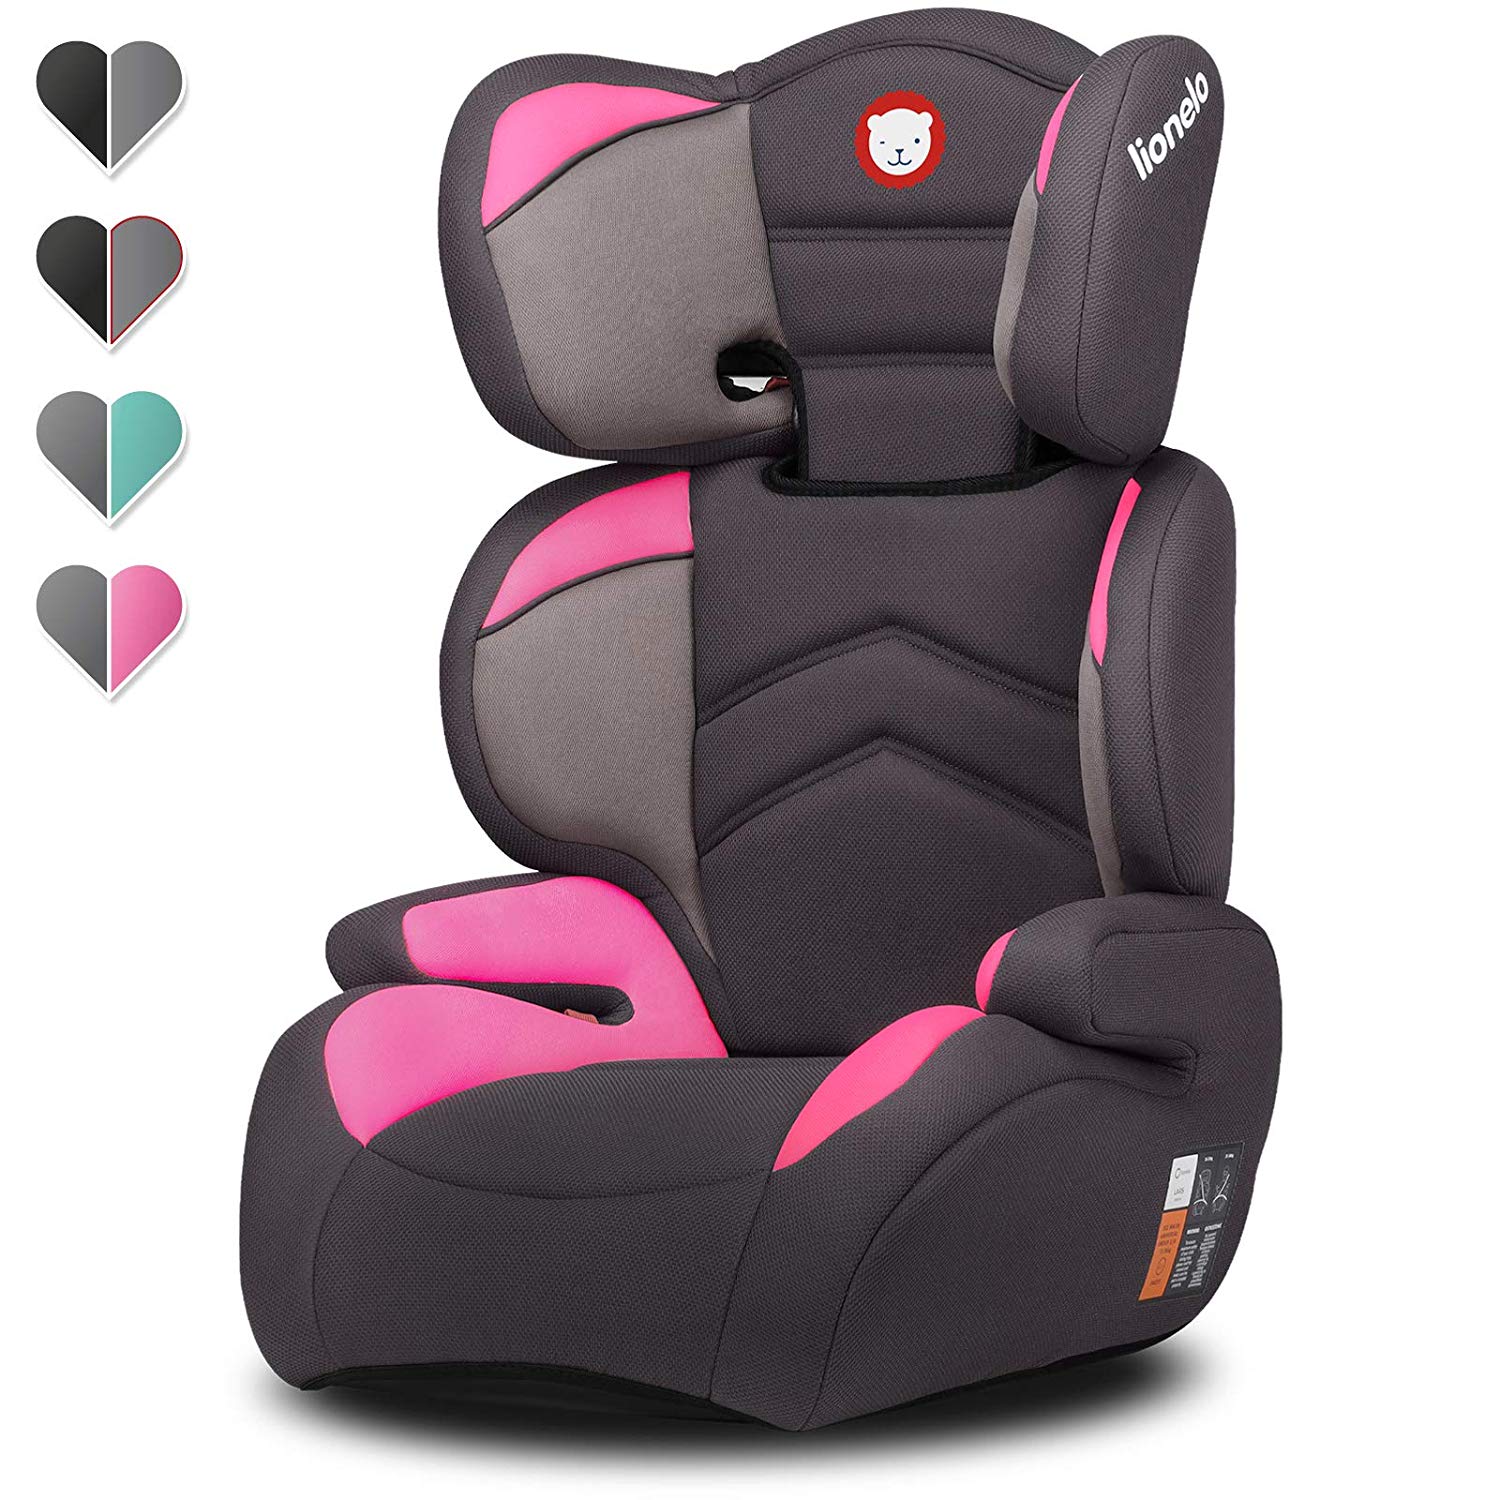 Lionelo Lars Child Seat, 15-36 kg Car Seat, Group 2 3, Reinforced Headrest with Adjustment Option, Side Protection Armrests, ImpactGuard Construction